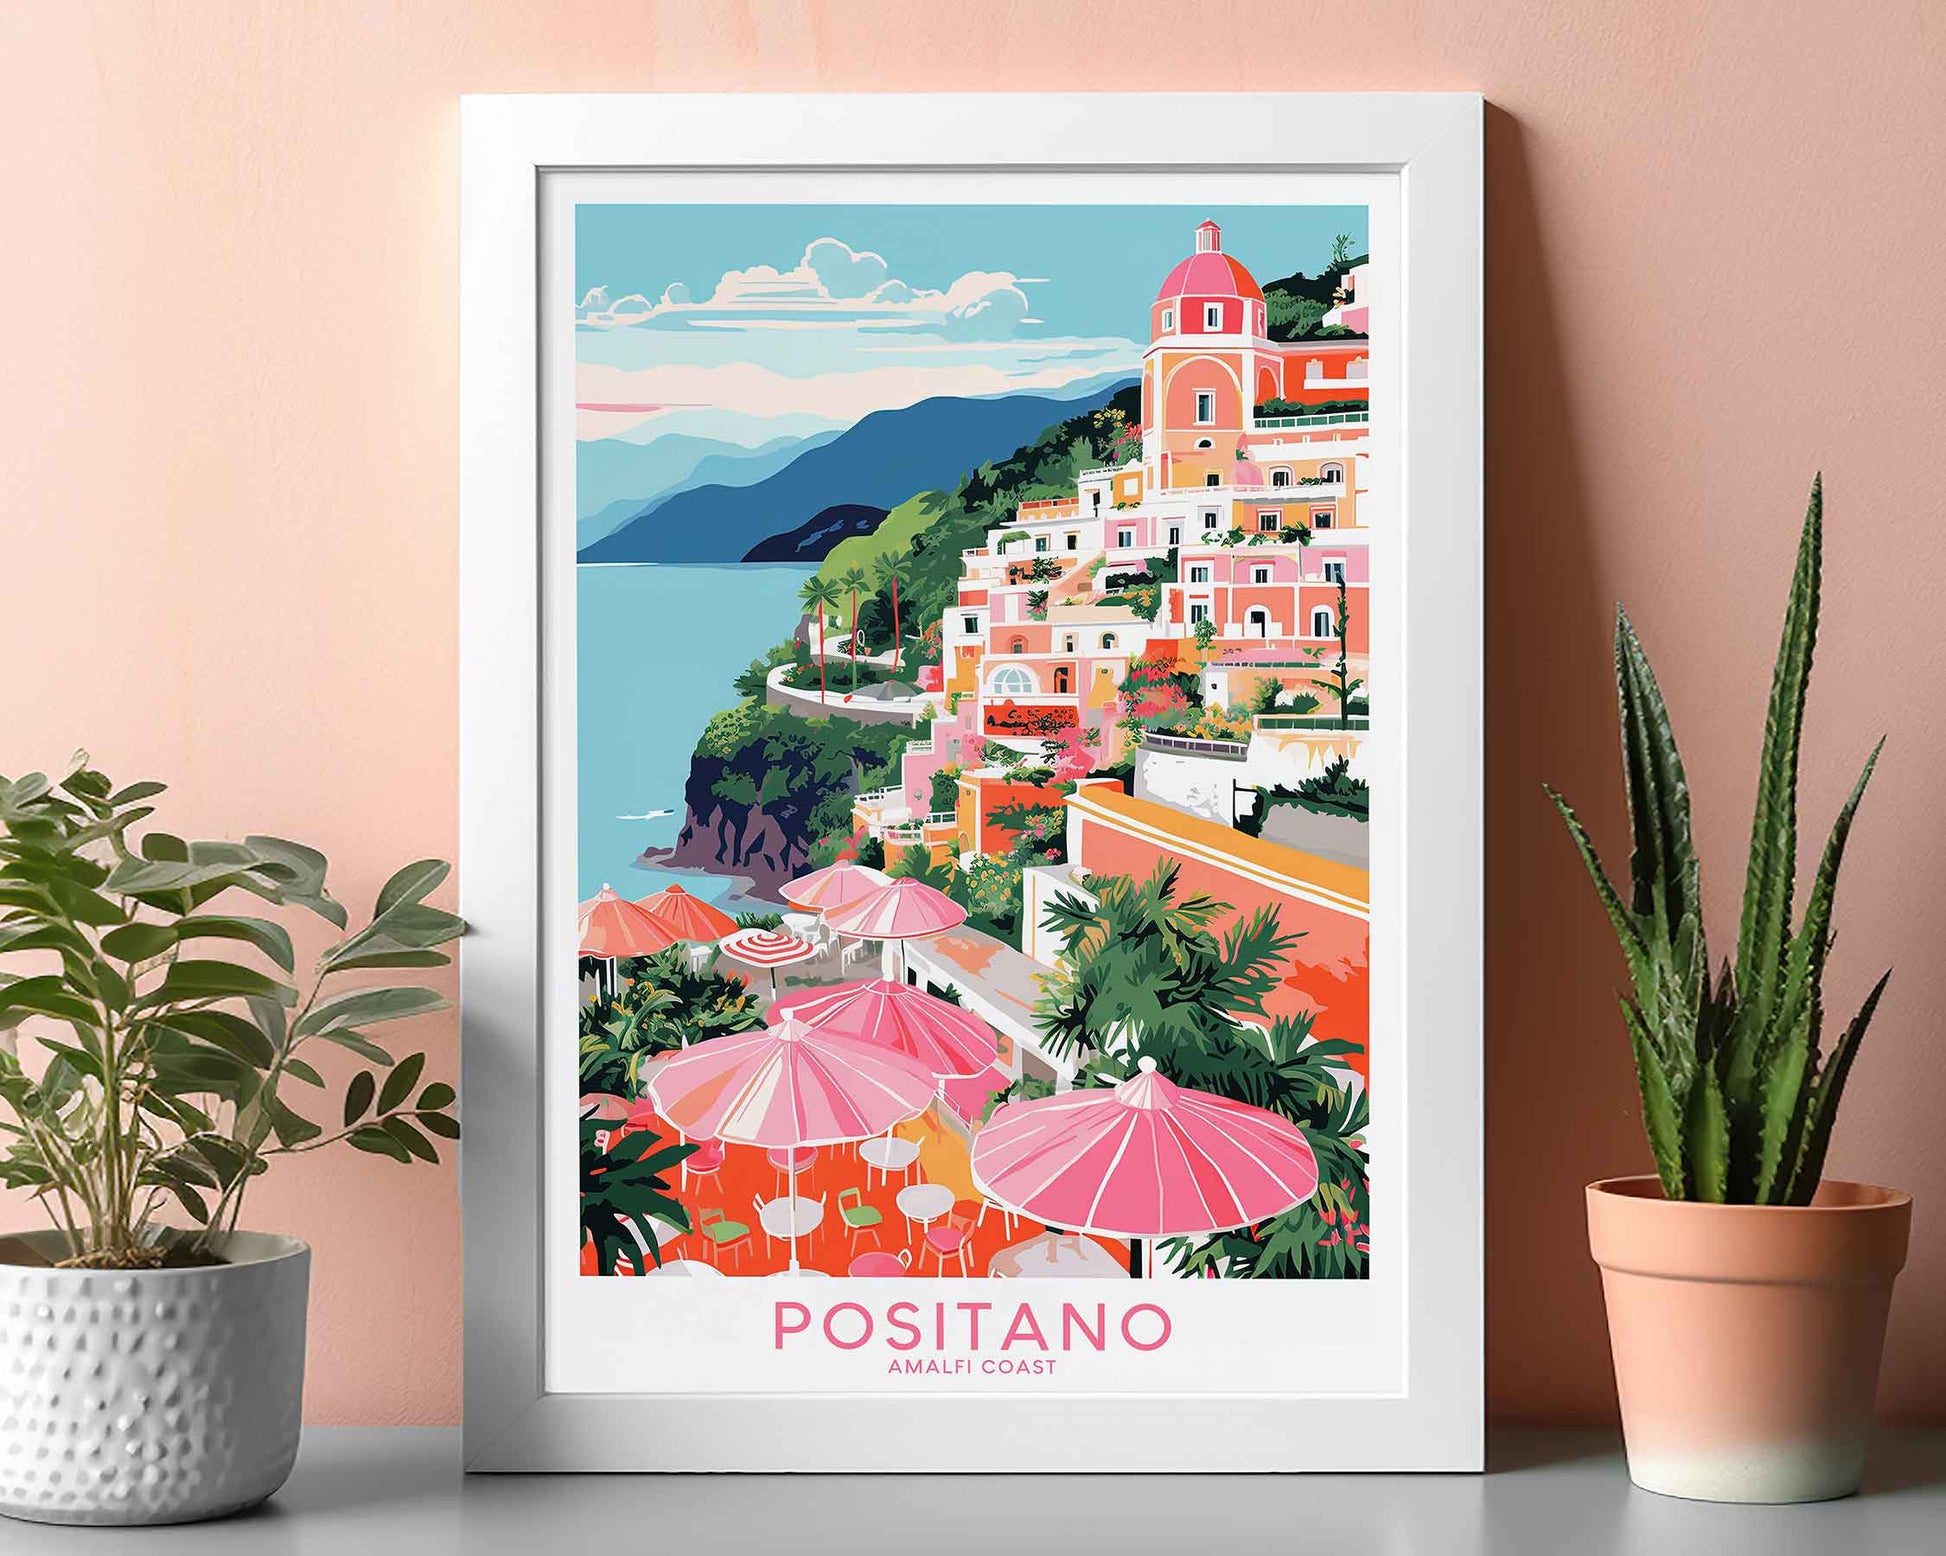 Framed Image of Positano Italy Wall Art Travel Print Posters Illustration